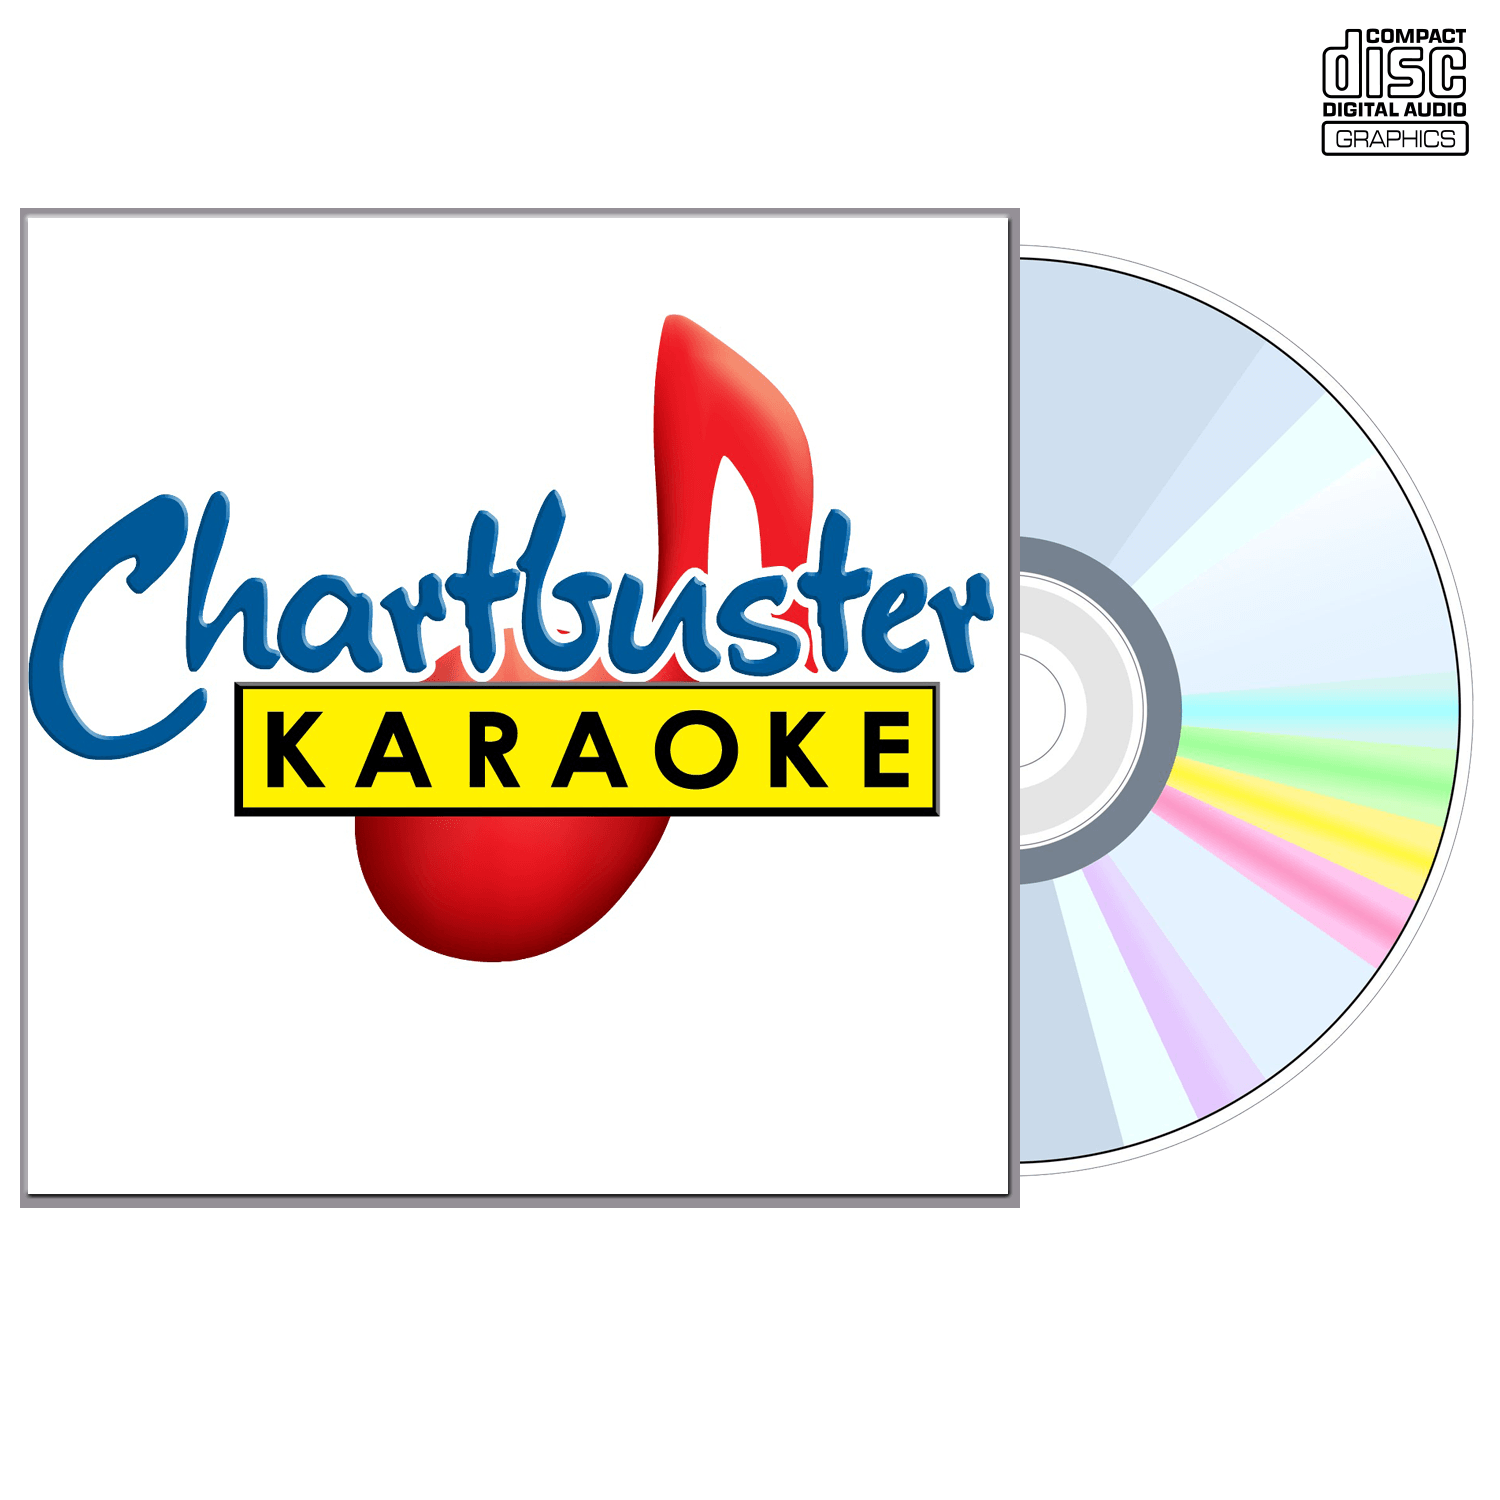 Best Of Clint Black - CD+G - Chartbuster Karaoke - Karaoke Home Entertainment